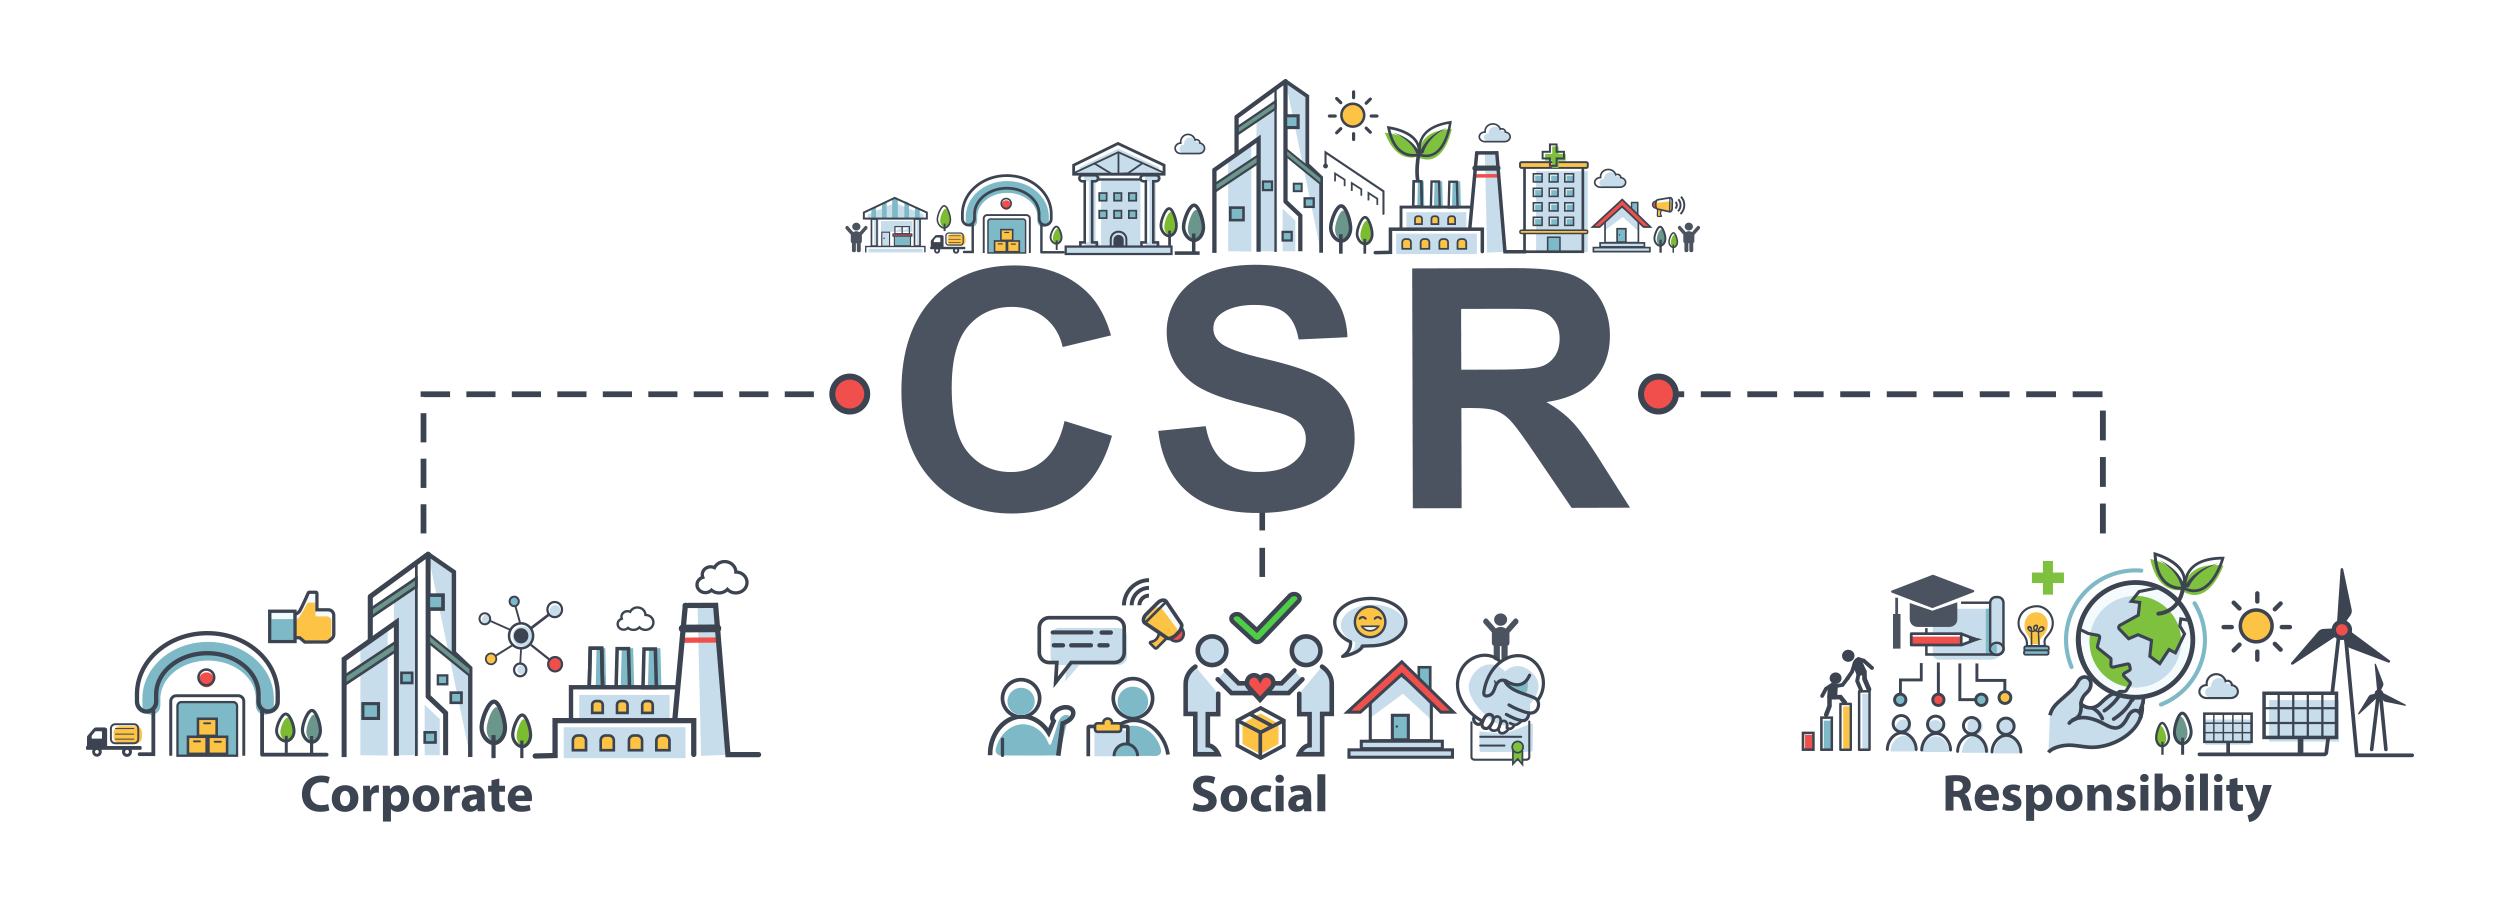 CSR_Banner_Illustration